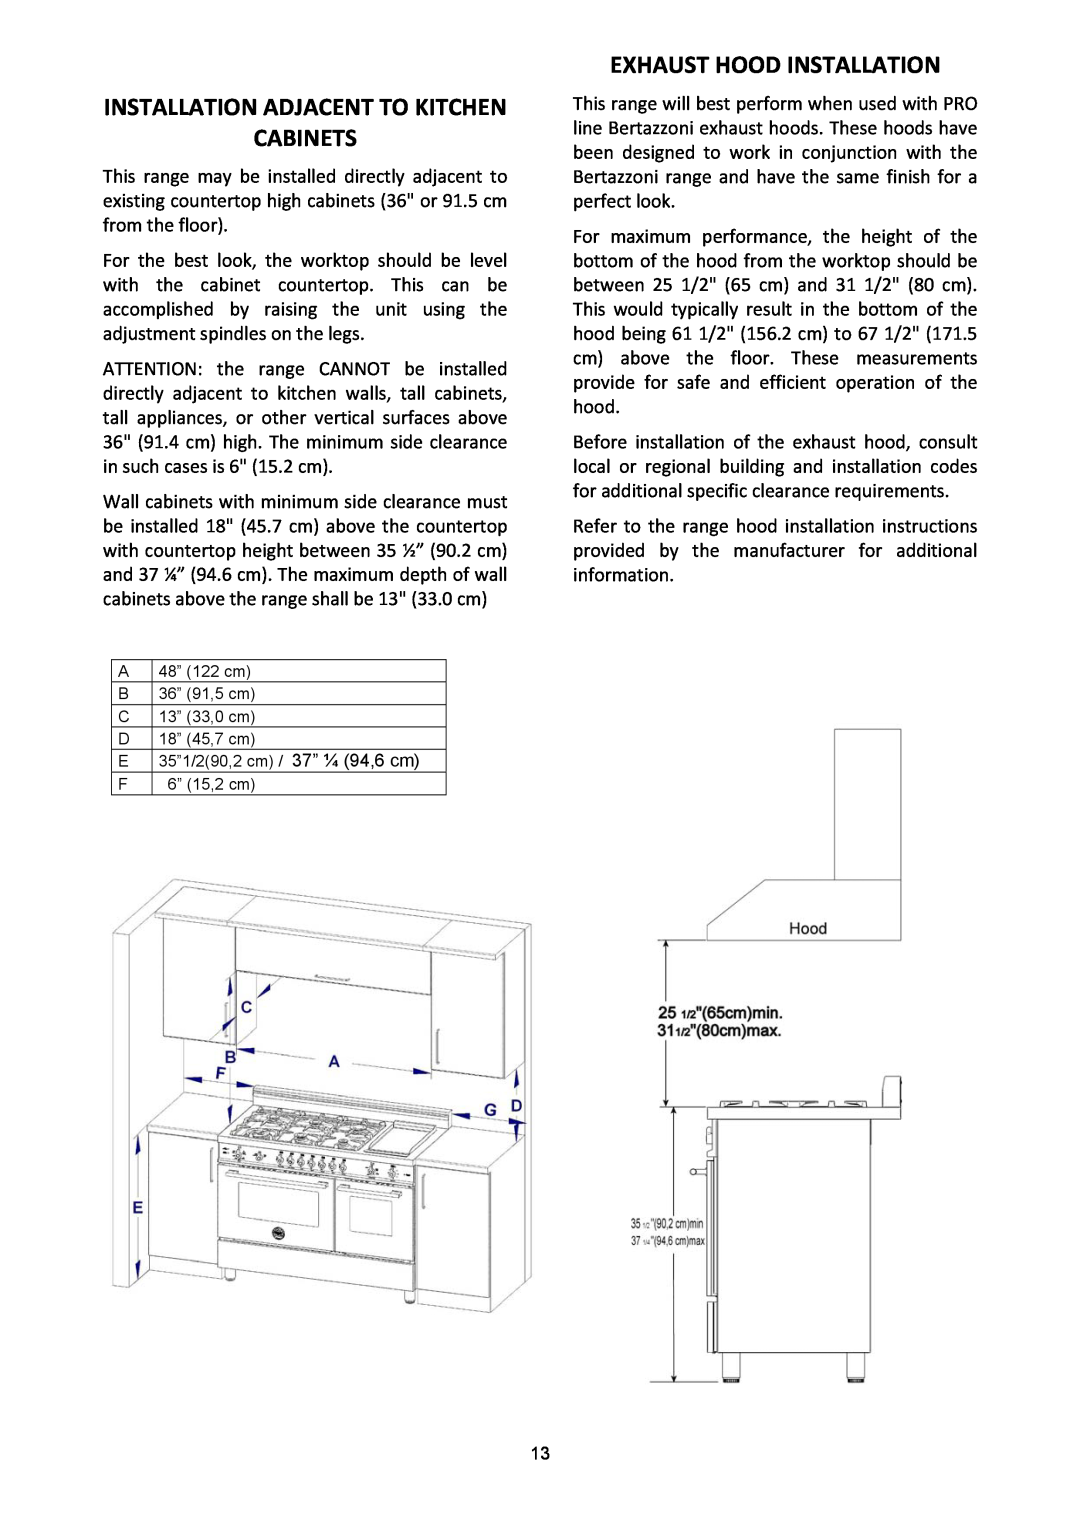 Bertazzoni X)486GPIRVE, X)486GPIRX, X)486GPIRVI, (A Installation Adjacent To Kitchen Cabinets, Exhaust Hood Installation 